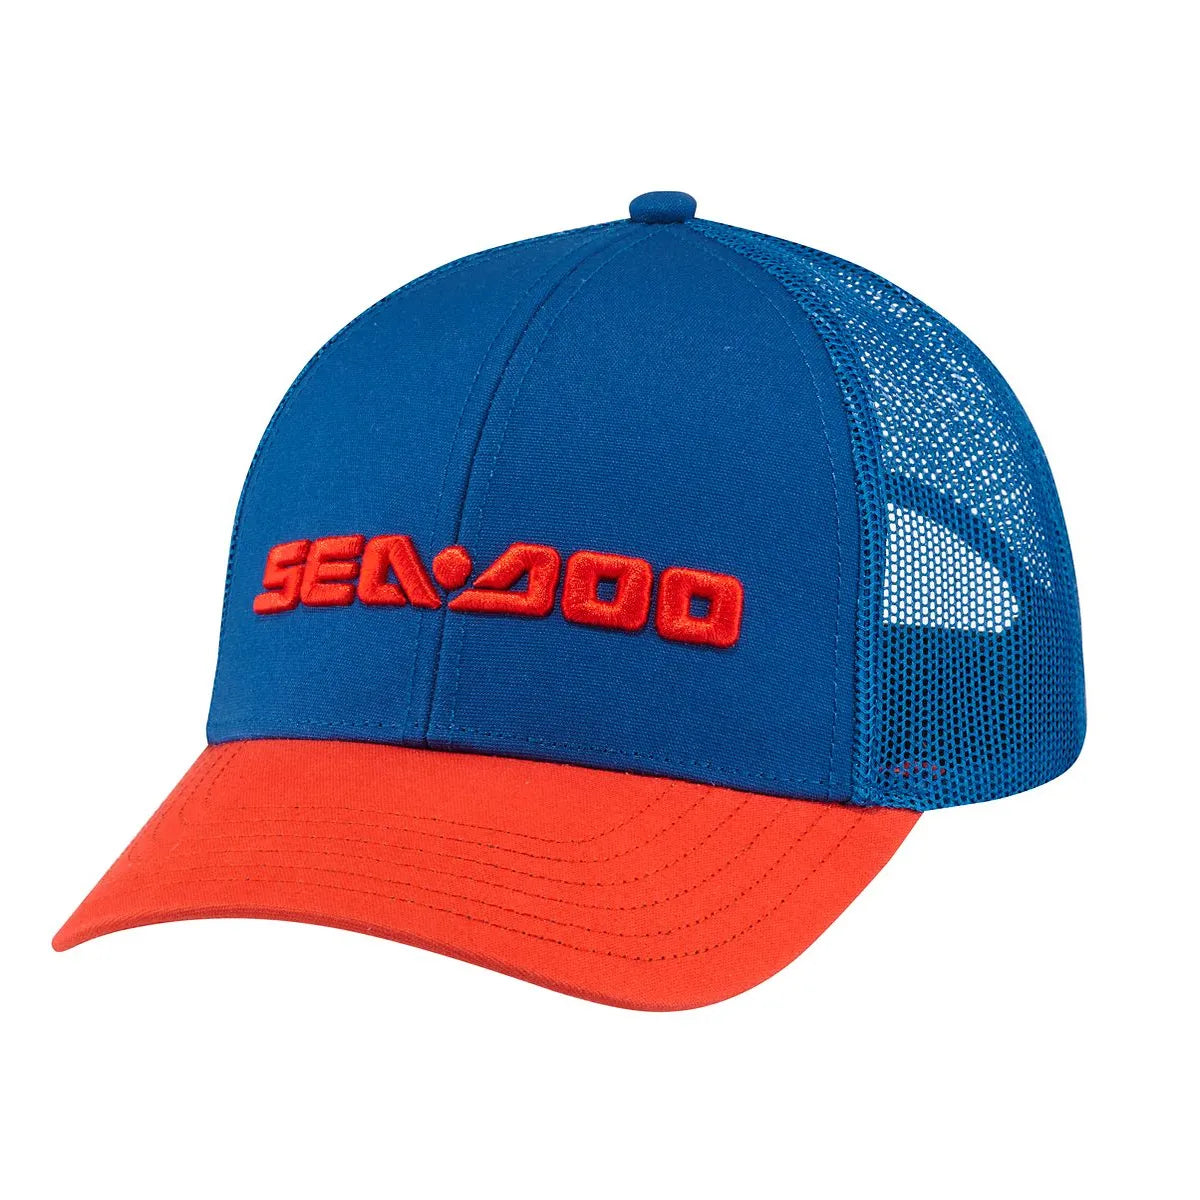 SEA-DOO YOUTH MESH CAP